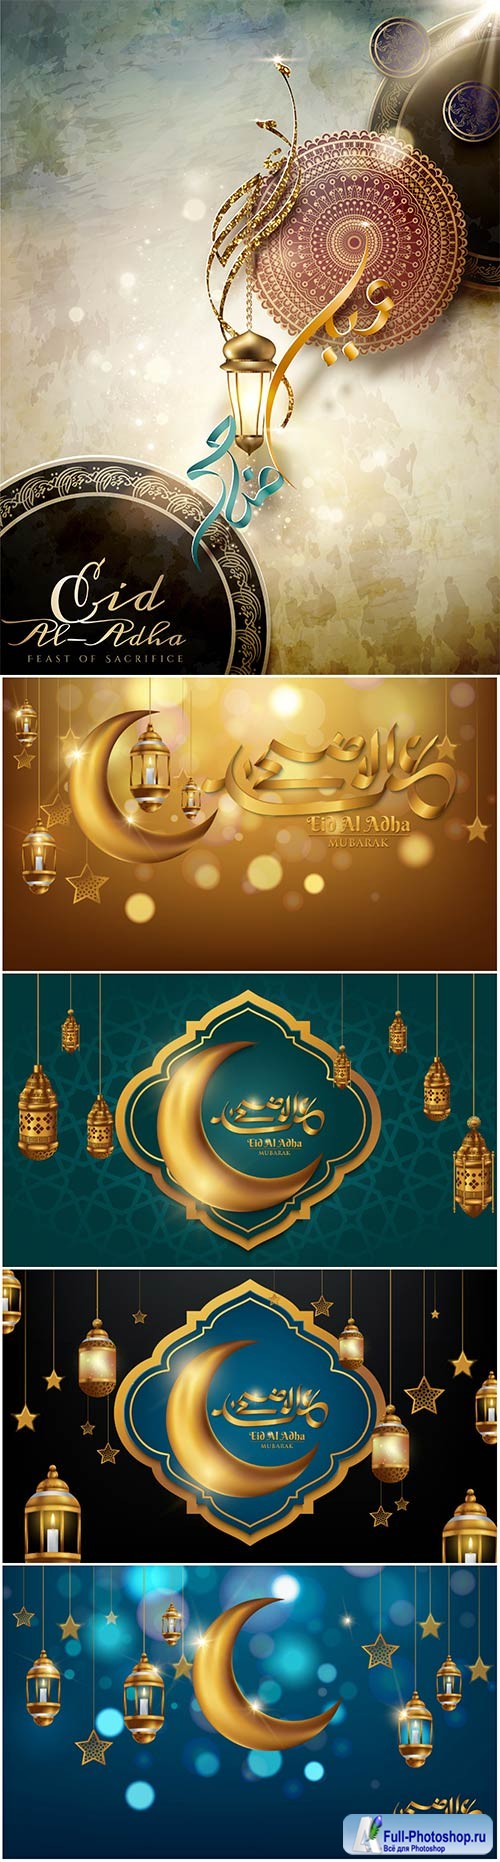 Eid al-adha calligraphy vector design